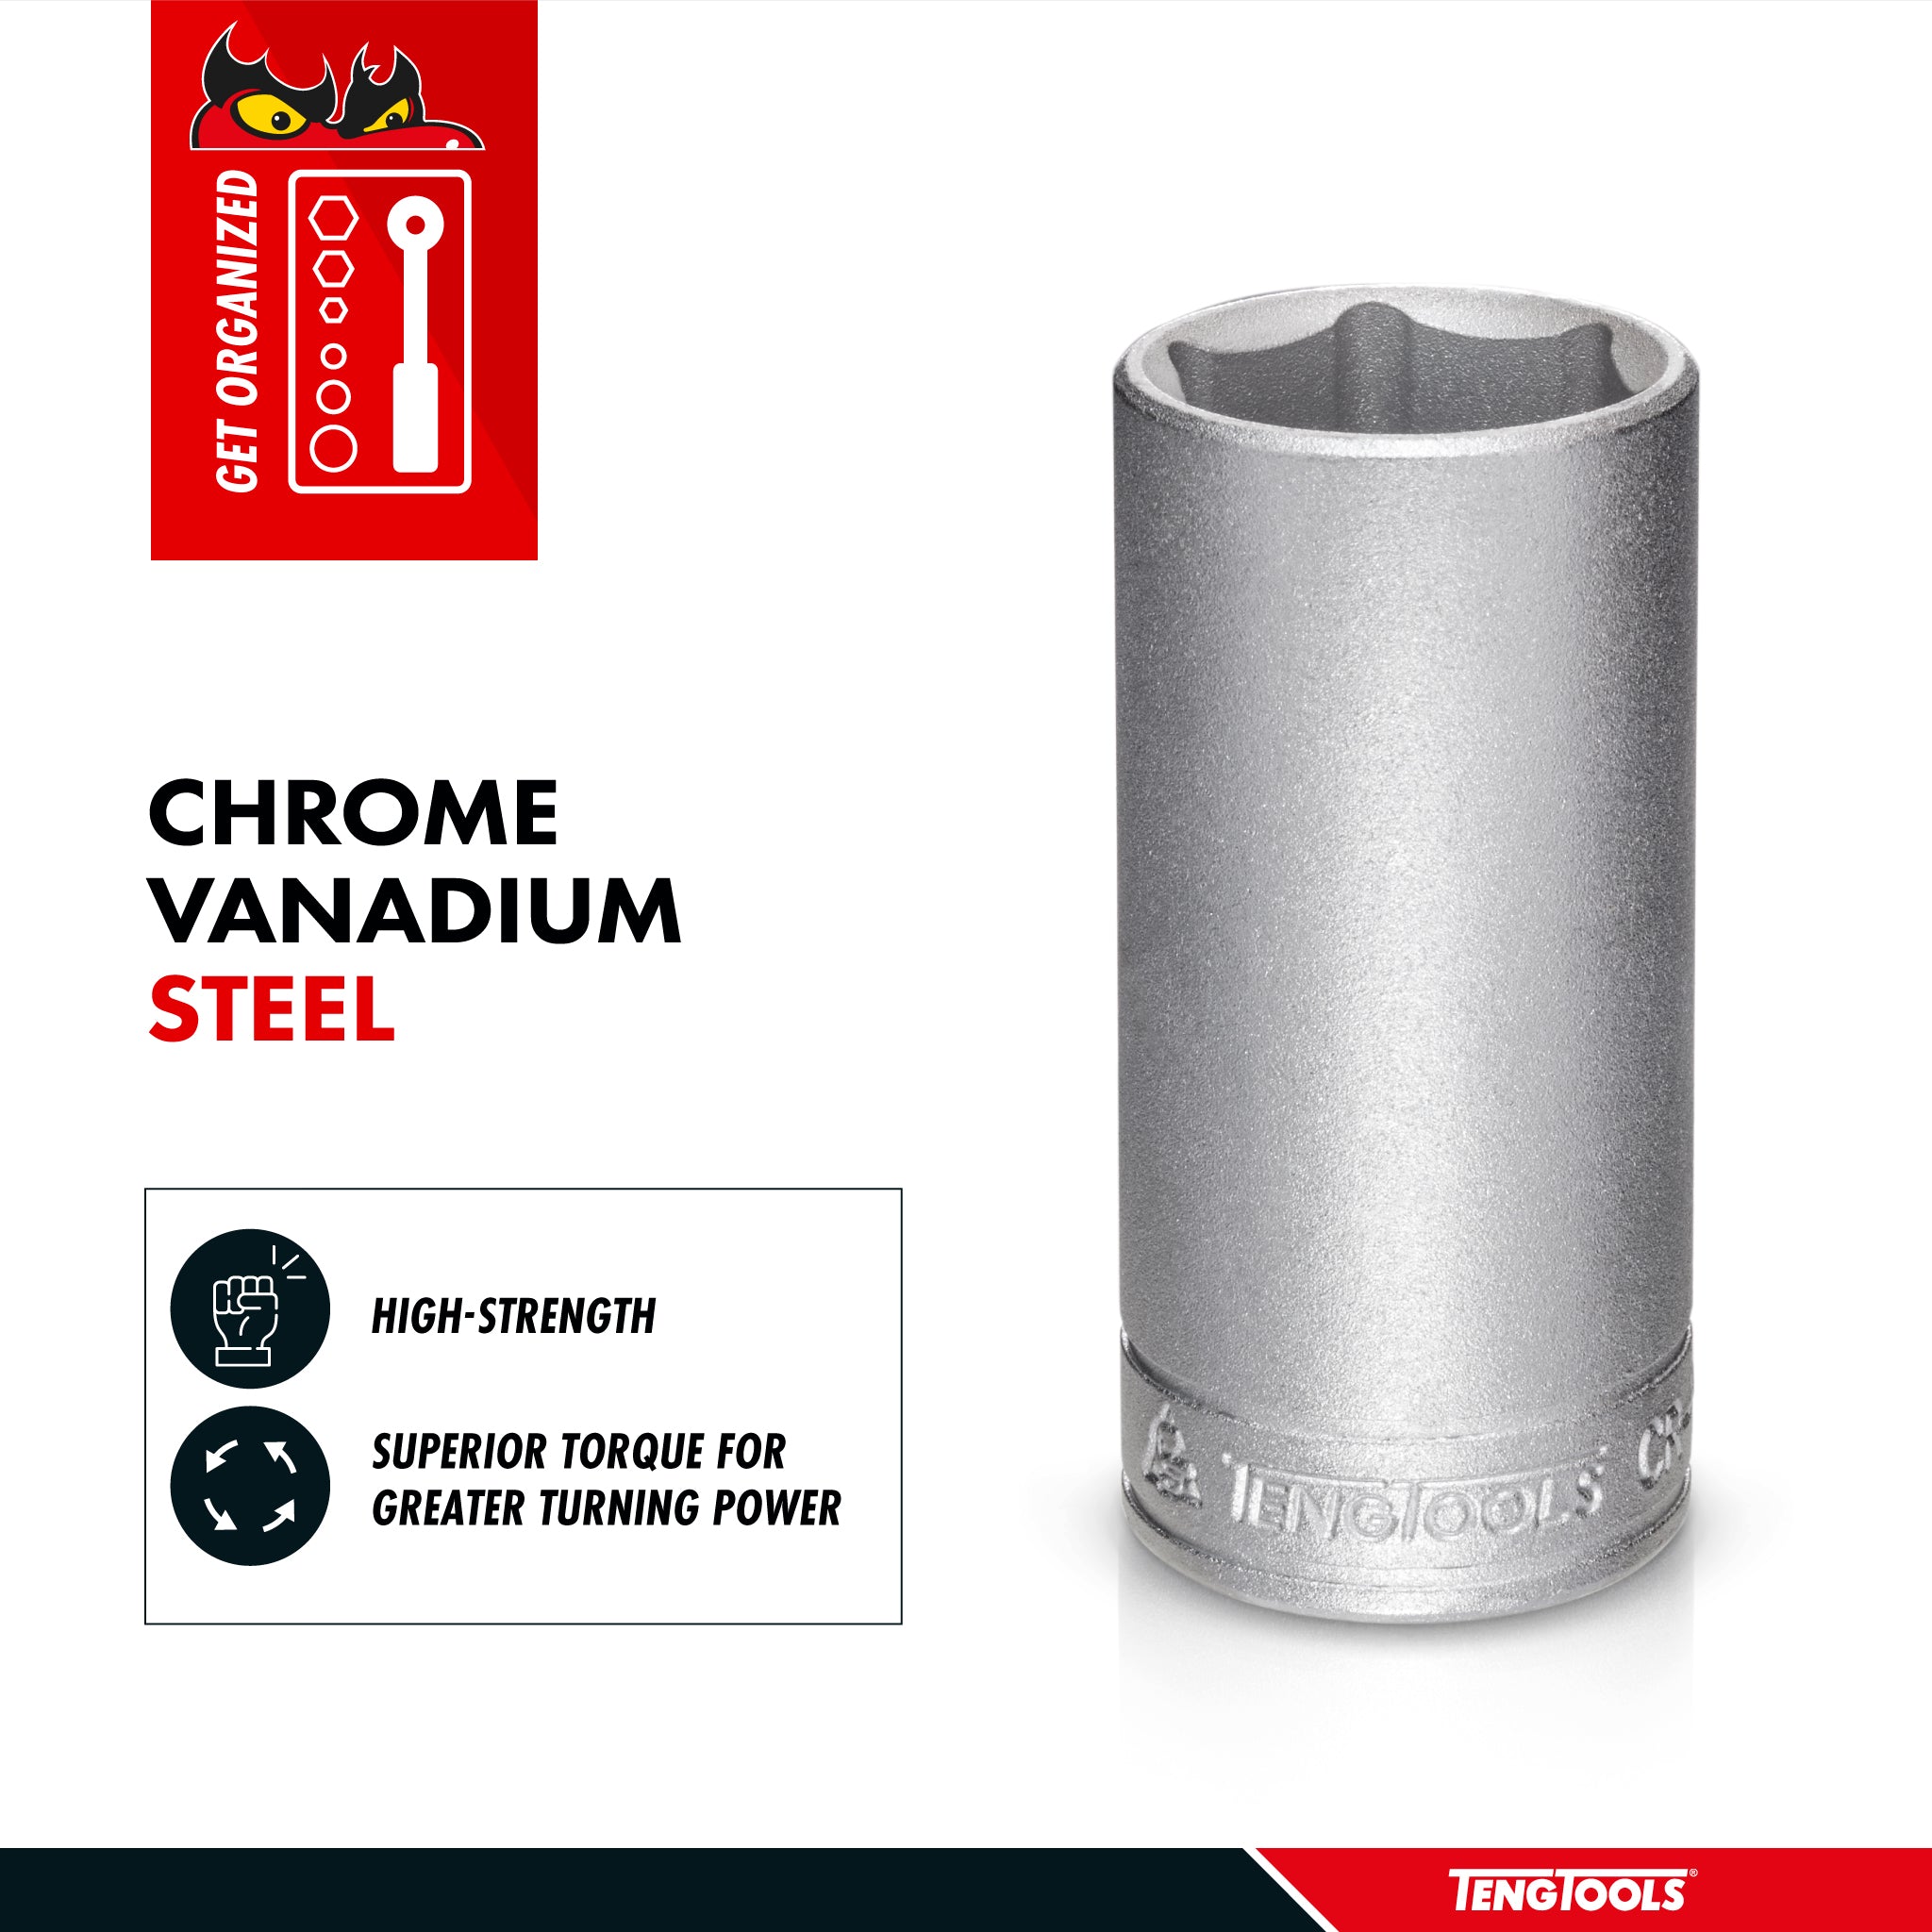 Teng Tools 3/8 Inch Drive 6 Point Metric Deep Chrome Vanadium Sockets - 12mm